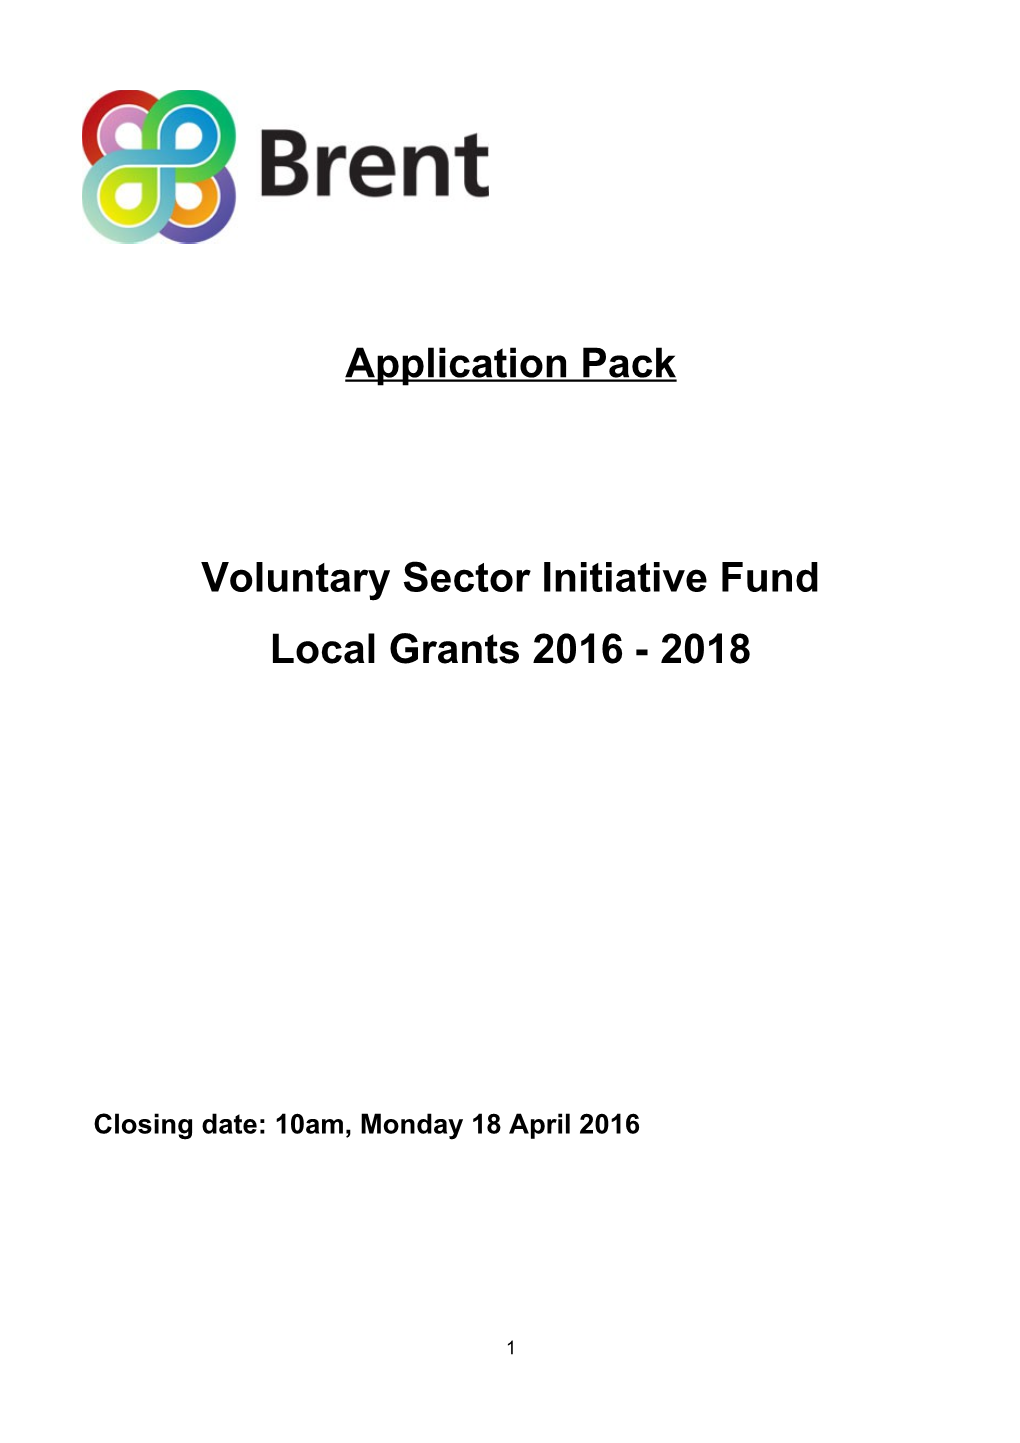 Voluntary Sector Initiative Fund